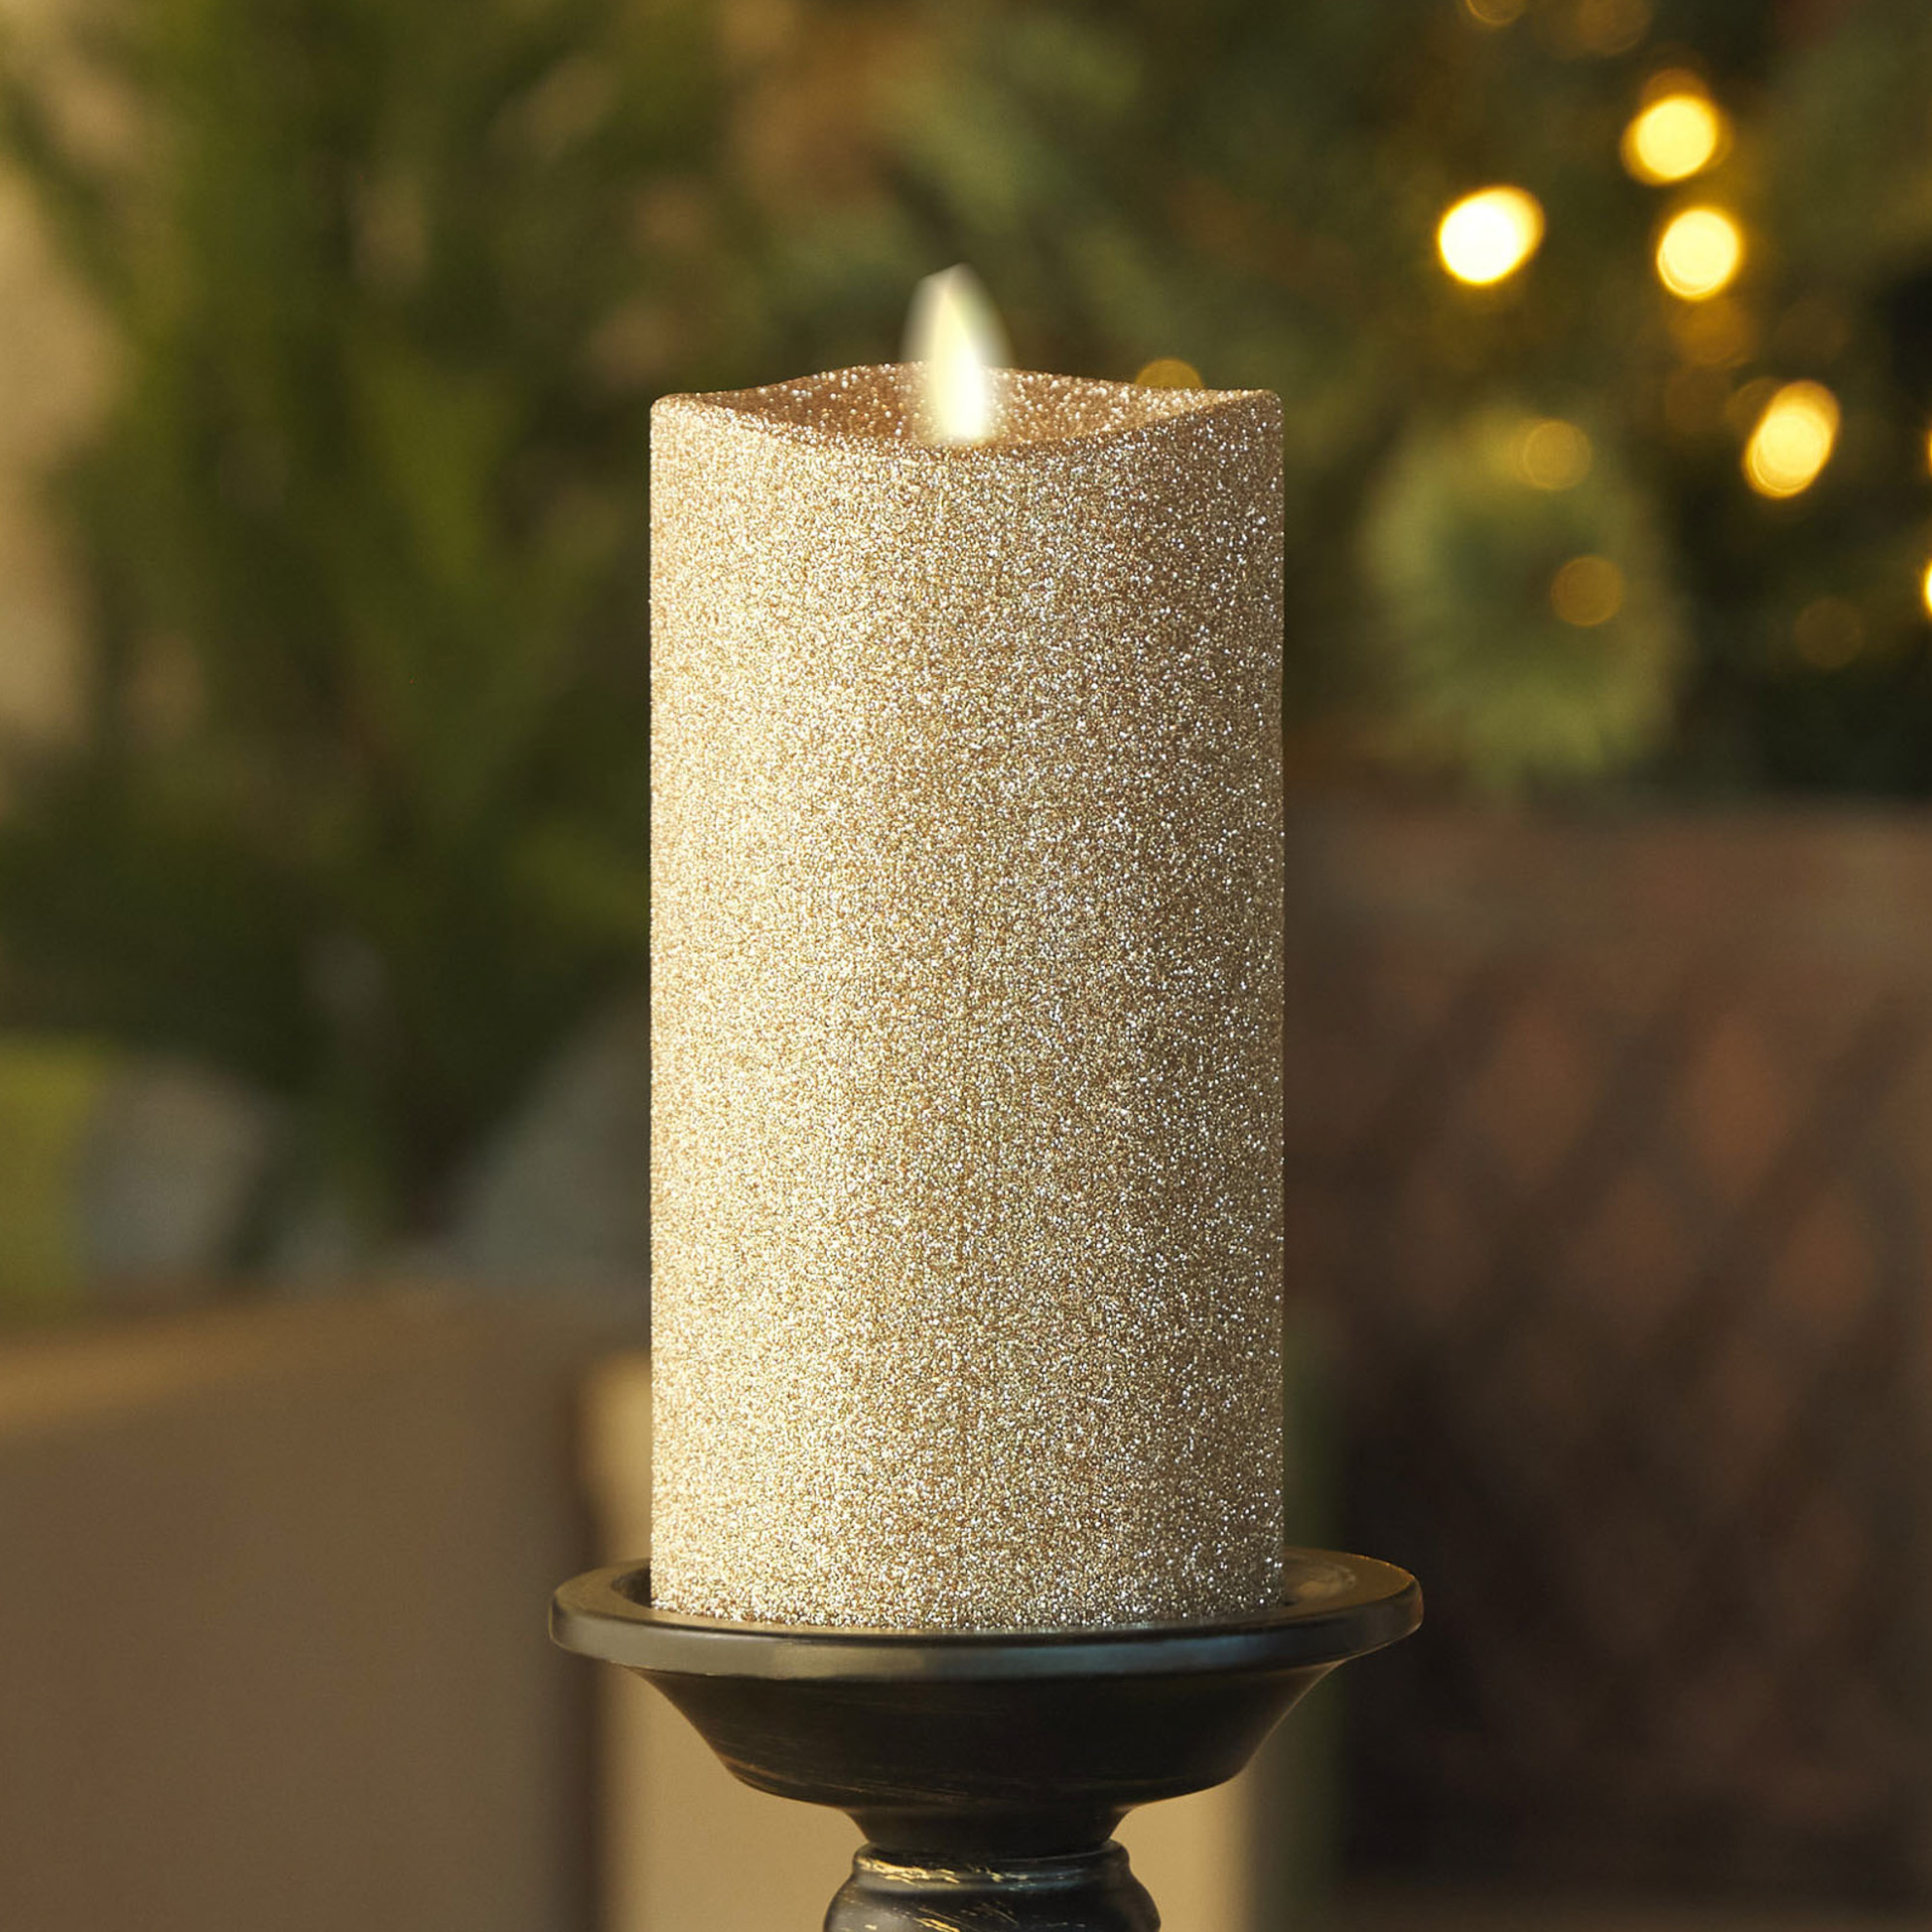 an image of Luminara's gold glitter candle